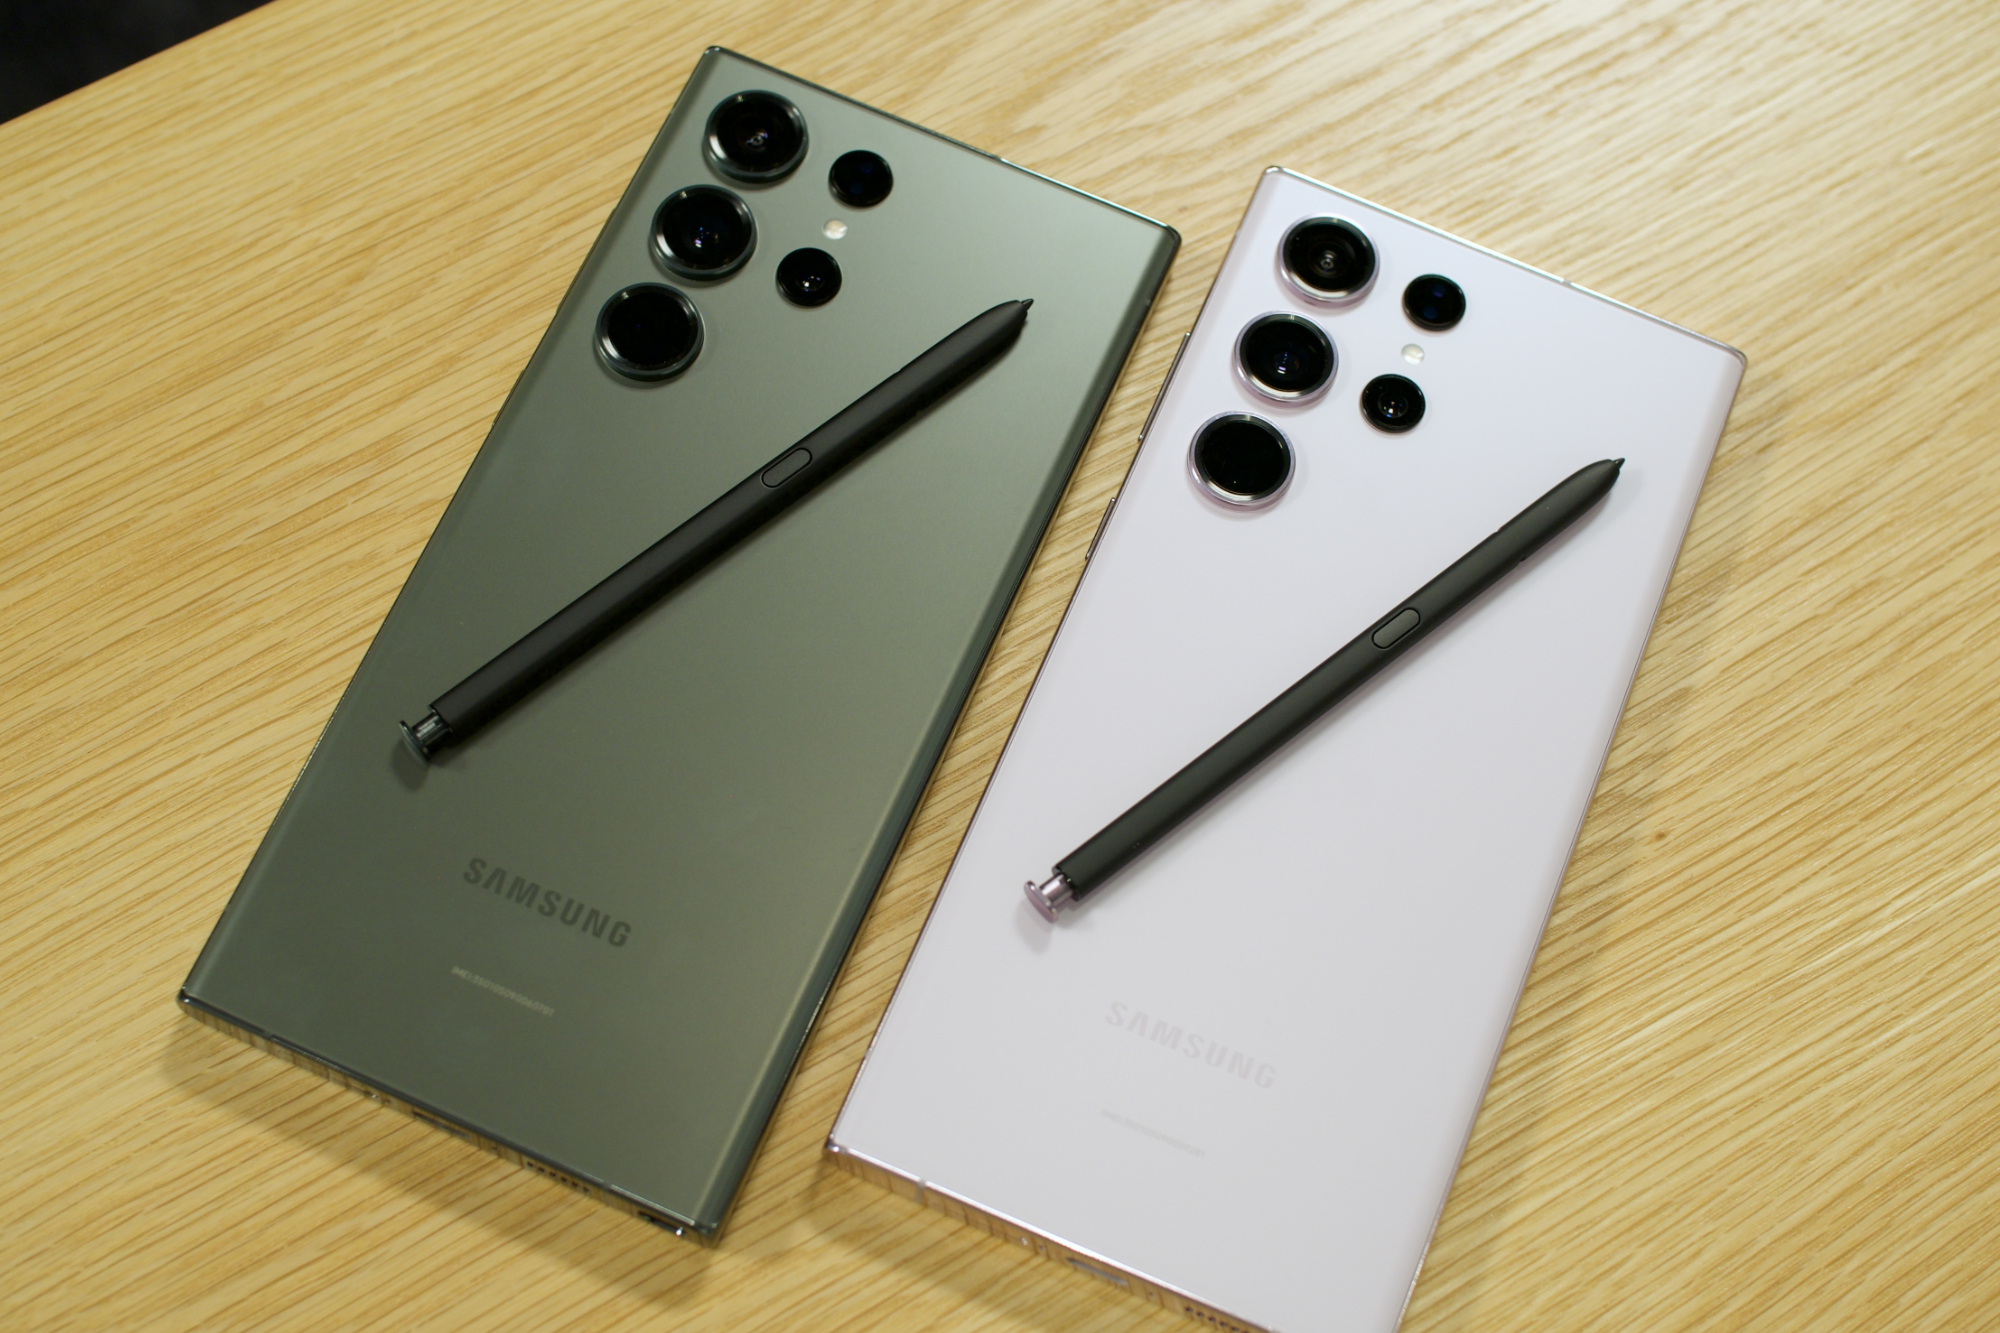 Samsung Galaxy S23 Ultra vs Galaxy S22 Ultra: The biggest upgrades